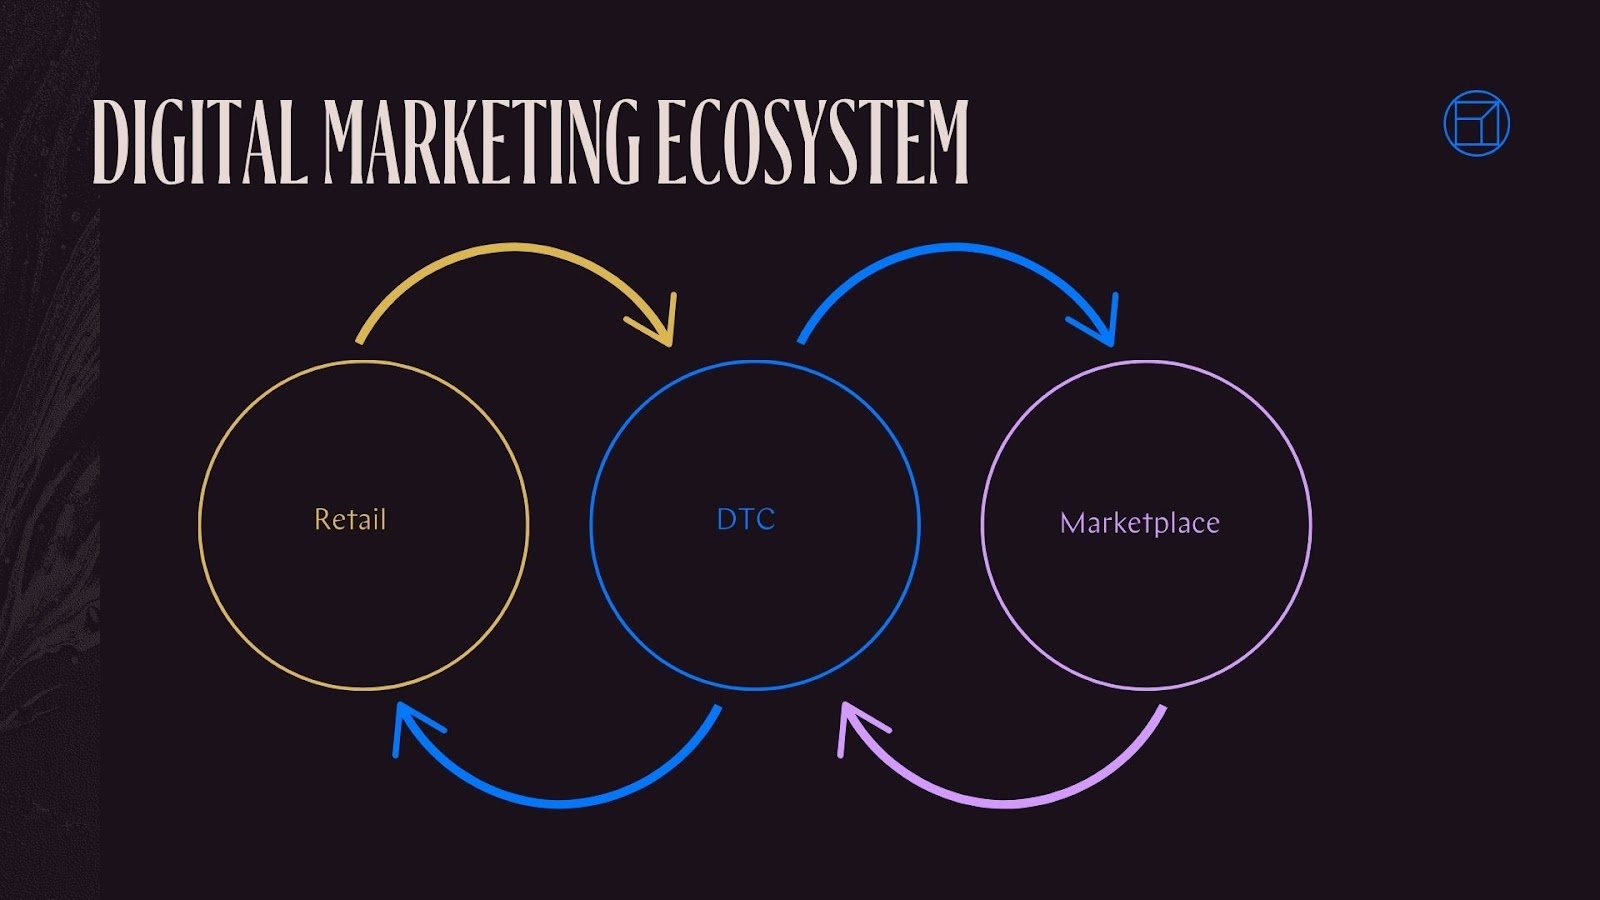 Digital marketing ecosystem